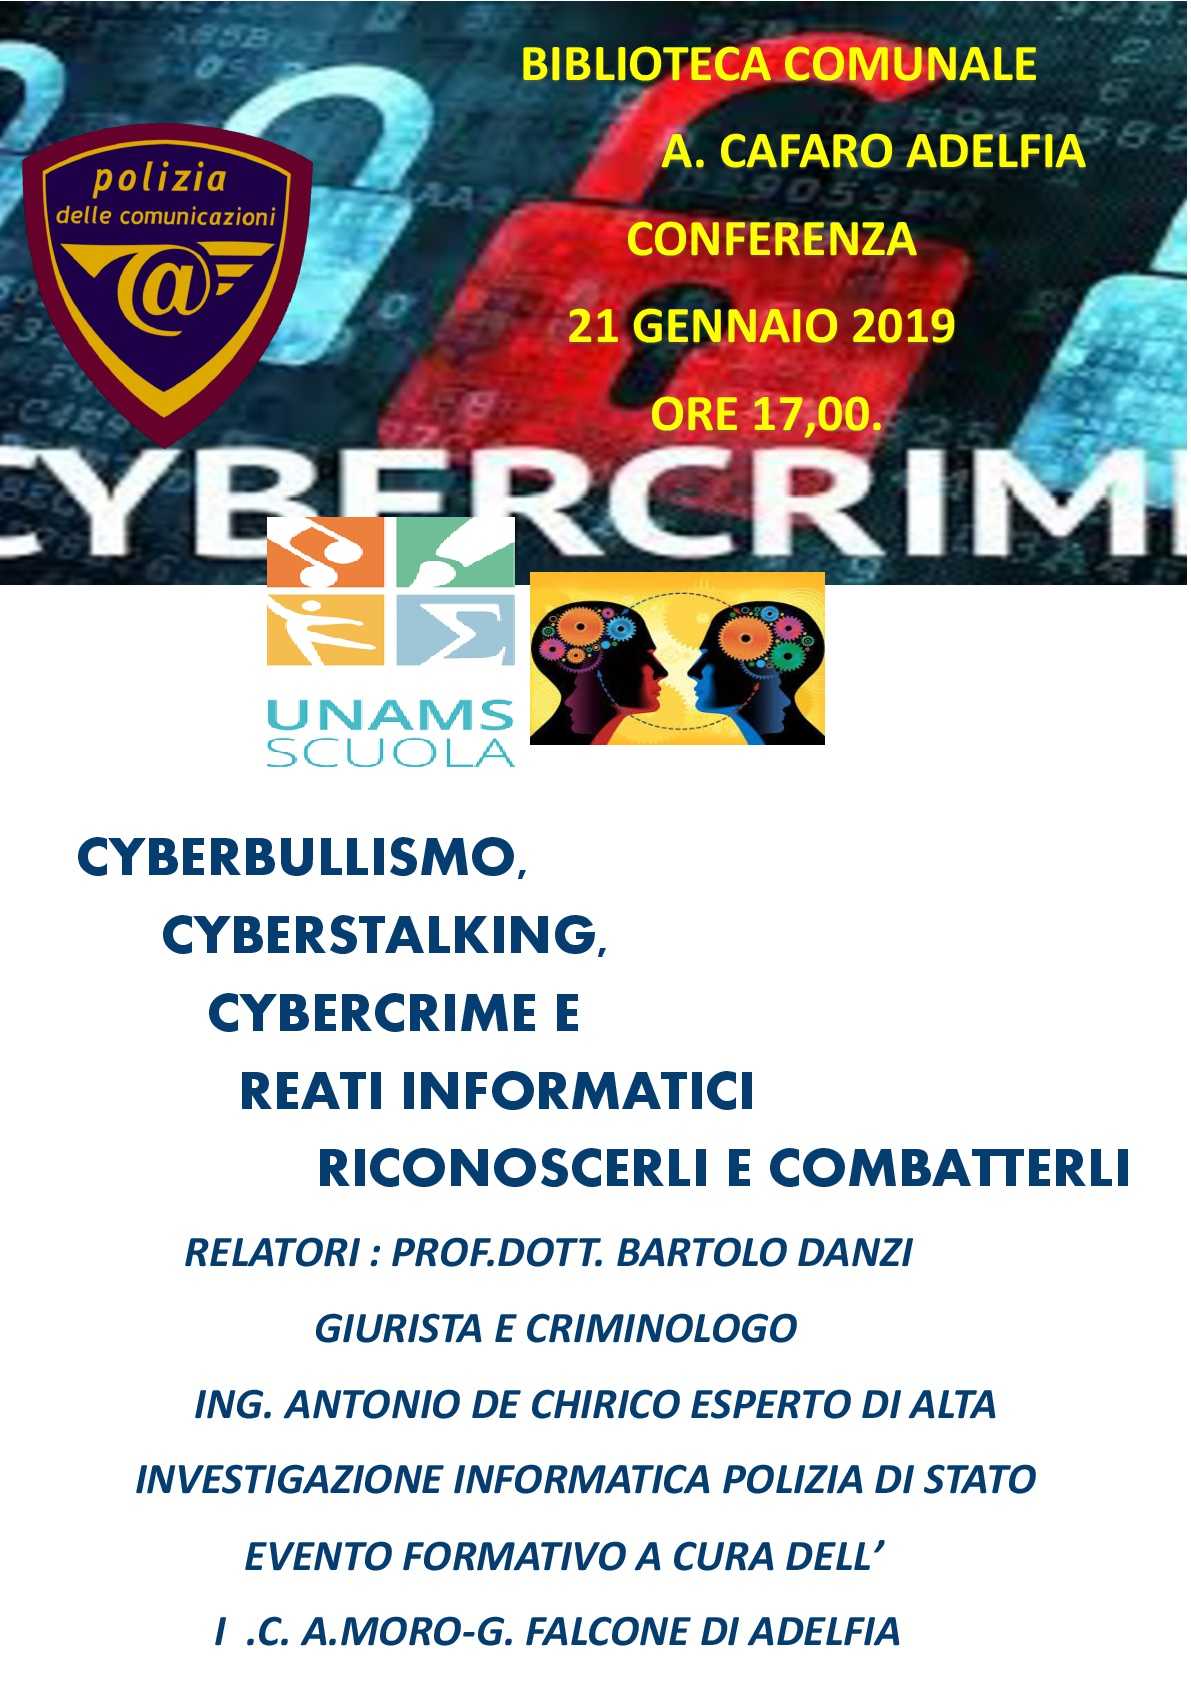 Cyberbullismo, cyberstalking. Riconoscerli e combatterli. Conferenza